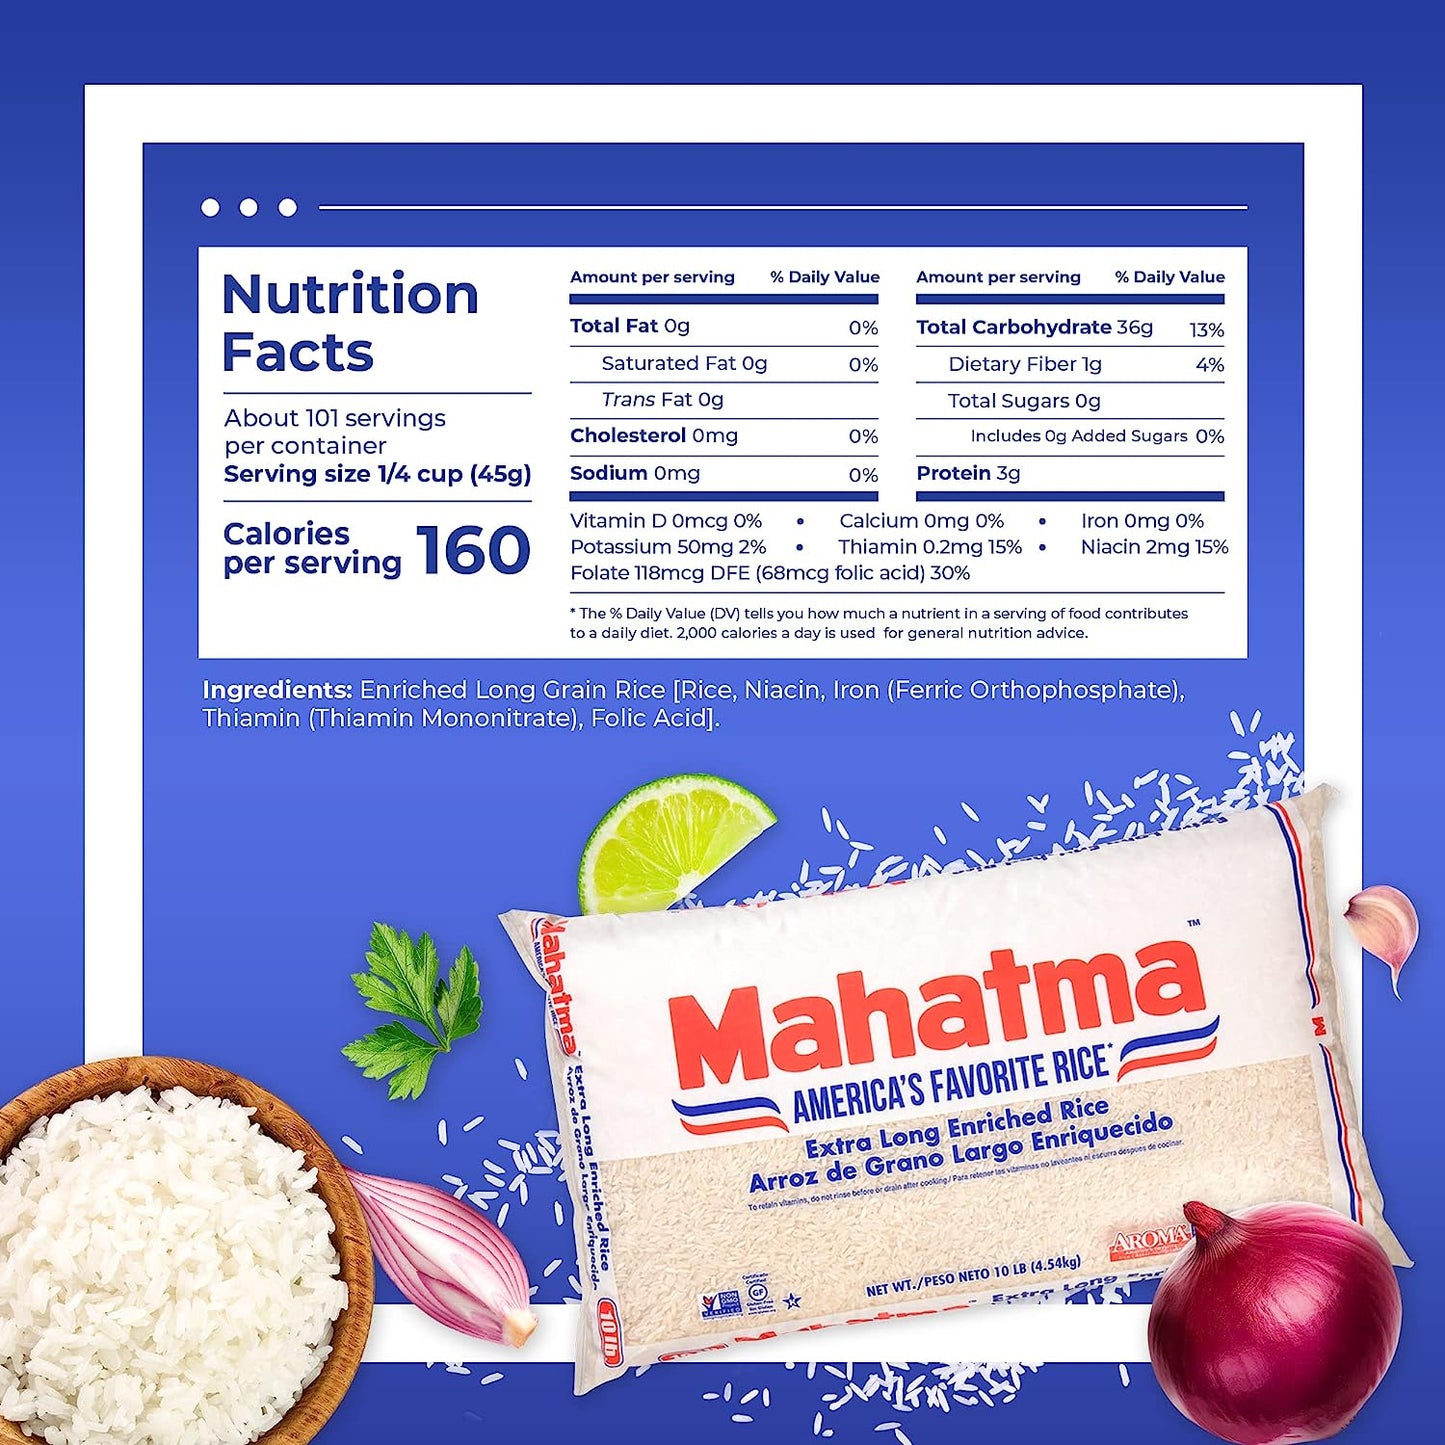 Mahatma Extra-Long-Grain Rice 10-Pound Rice Bag, Gluten-Free and Non-GMO White Rice Bulk Bag, 1 Bag of Rice